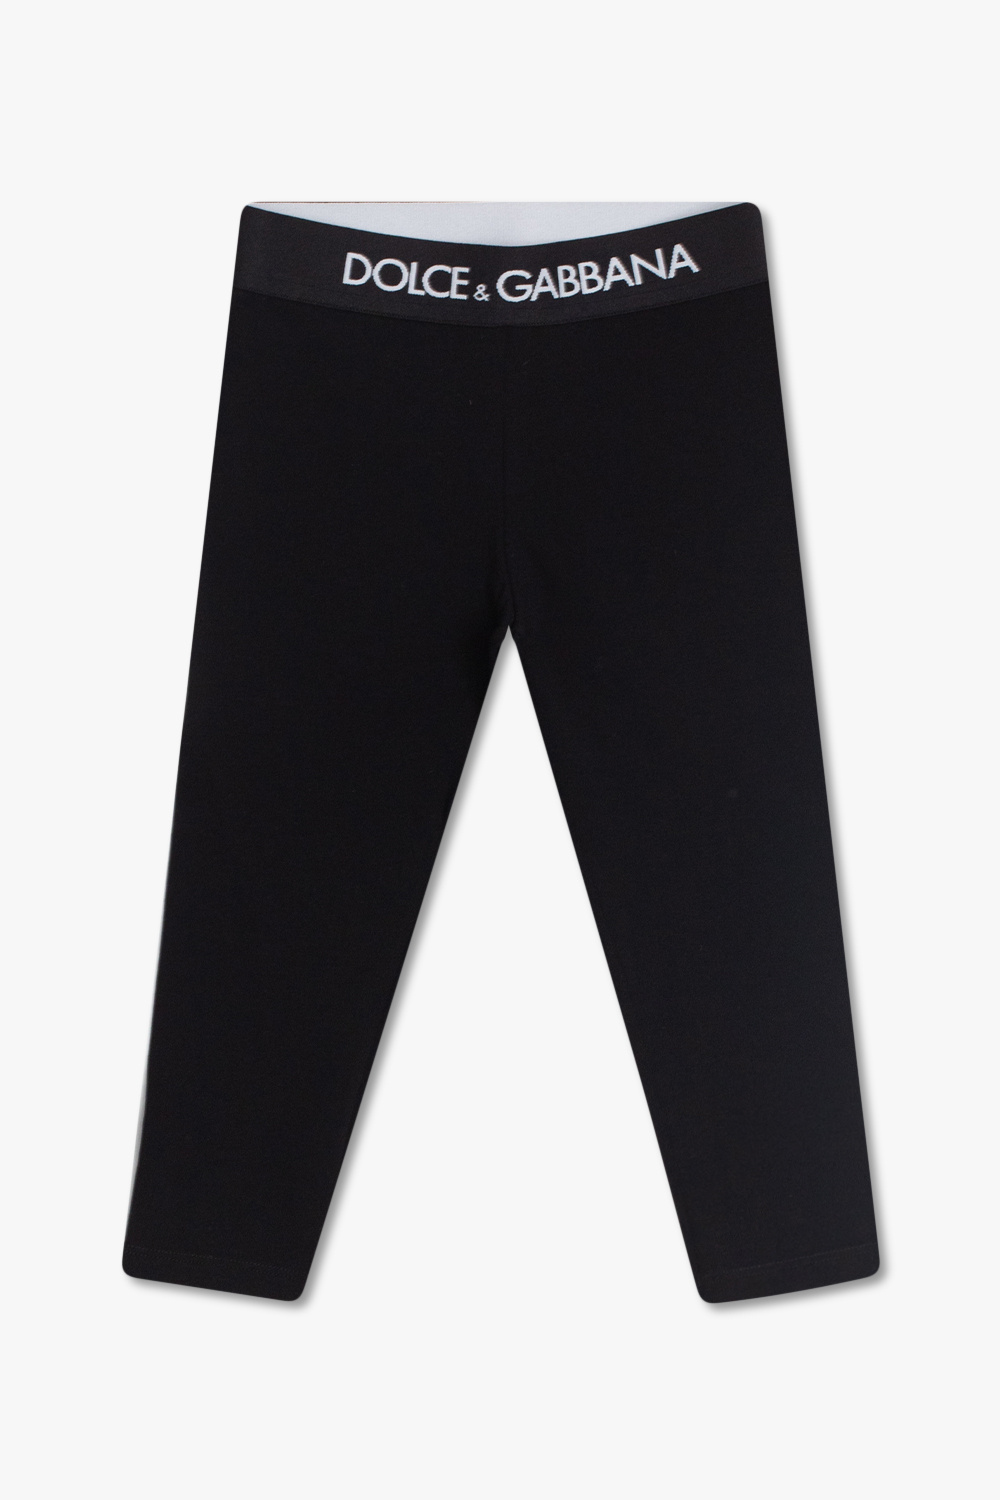 Dolce & Gabbana rose print shorts Cotton leggings